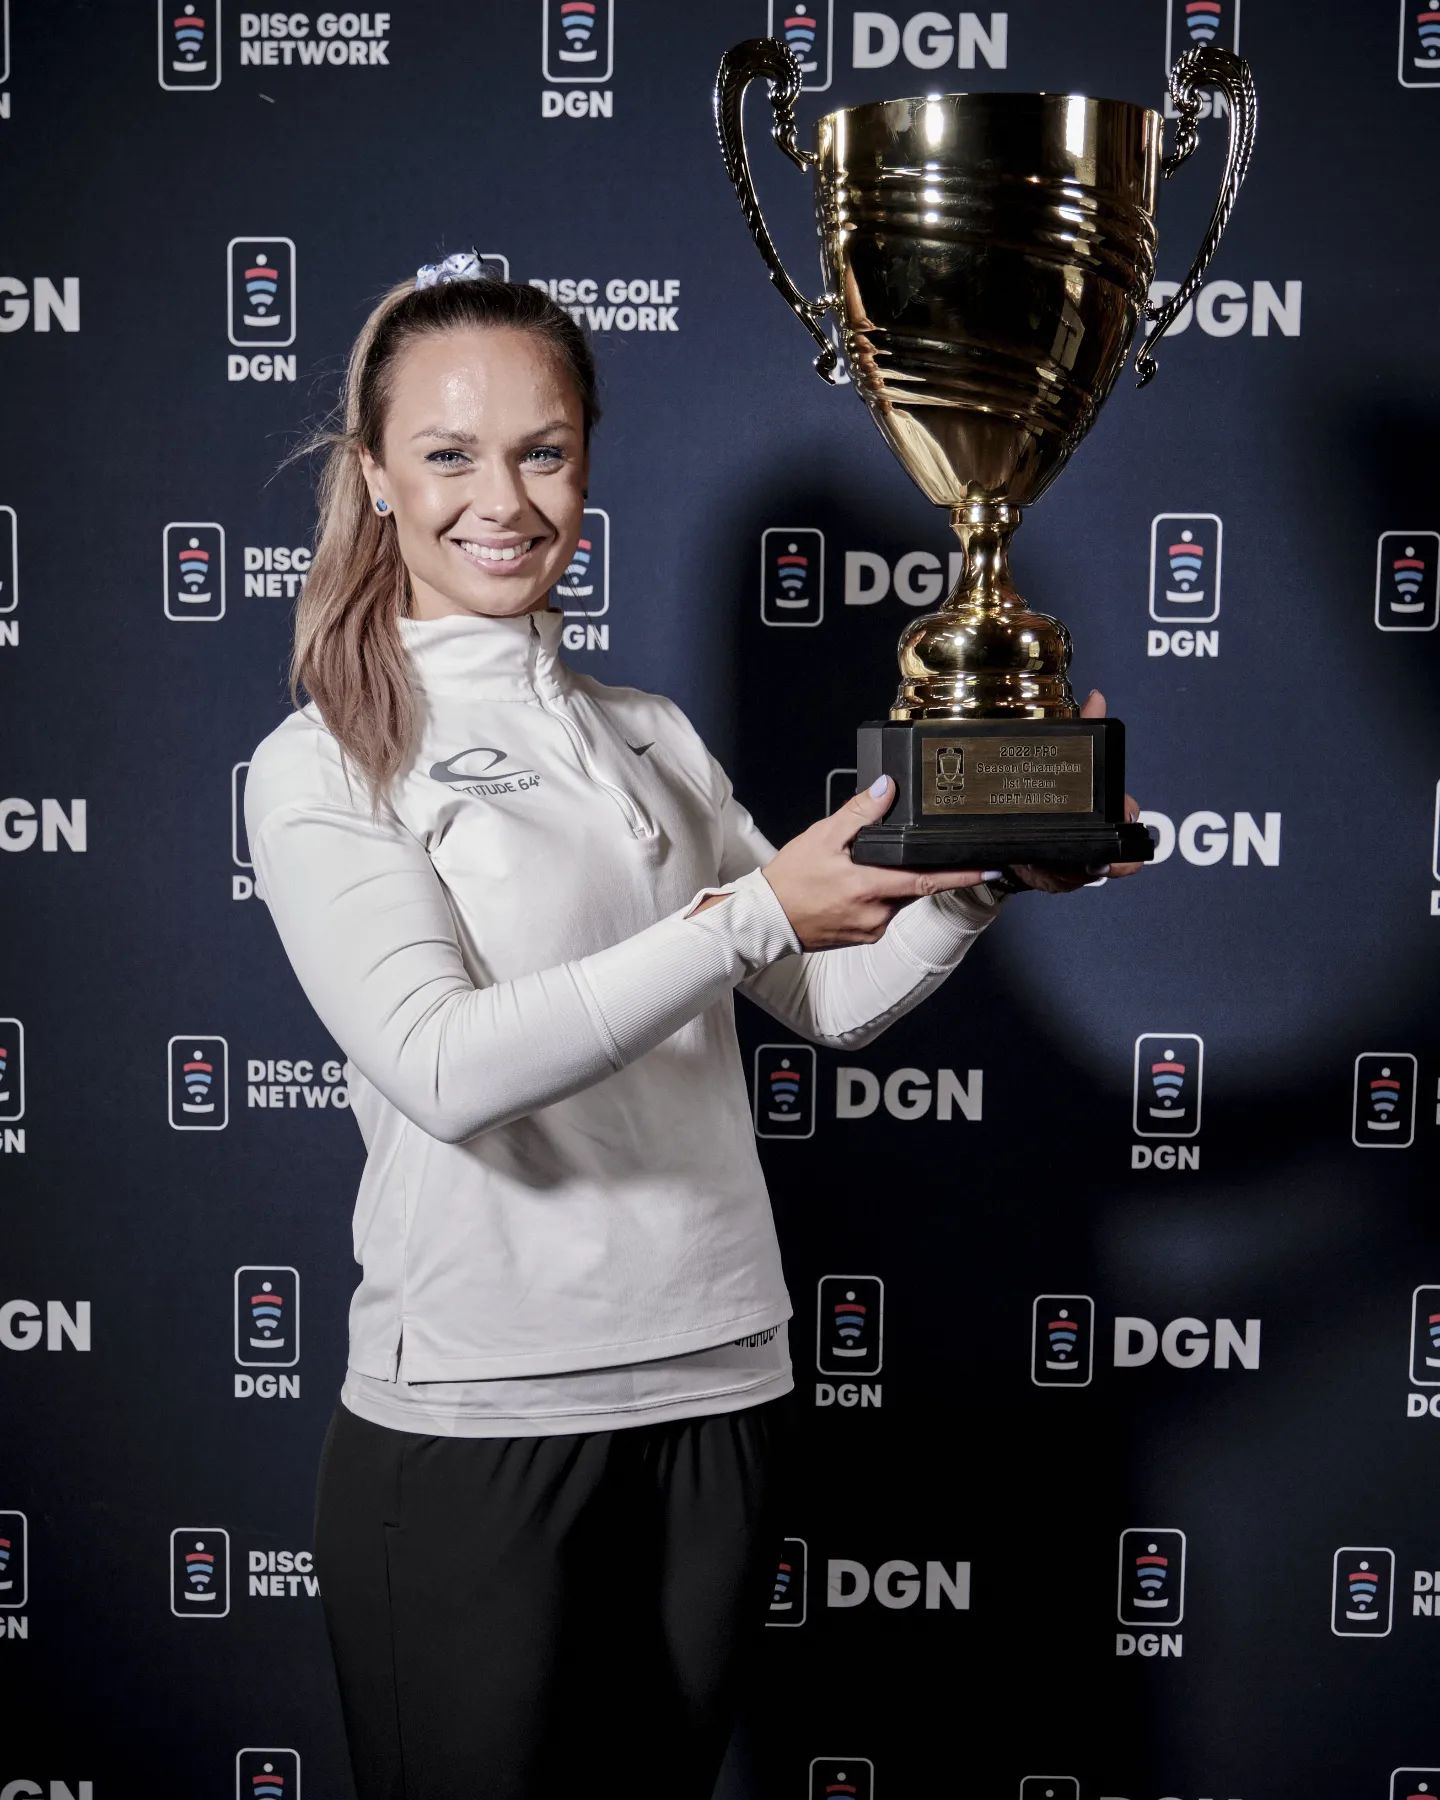 Kristin Tattar is the 2022 season FPO DGPT overall points winner